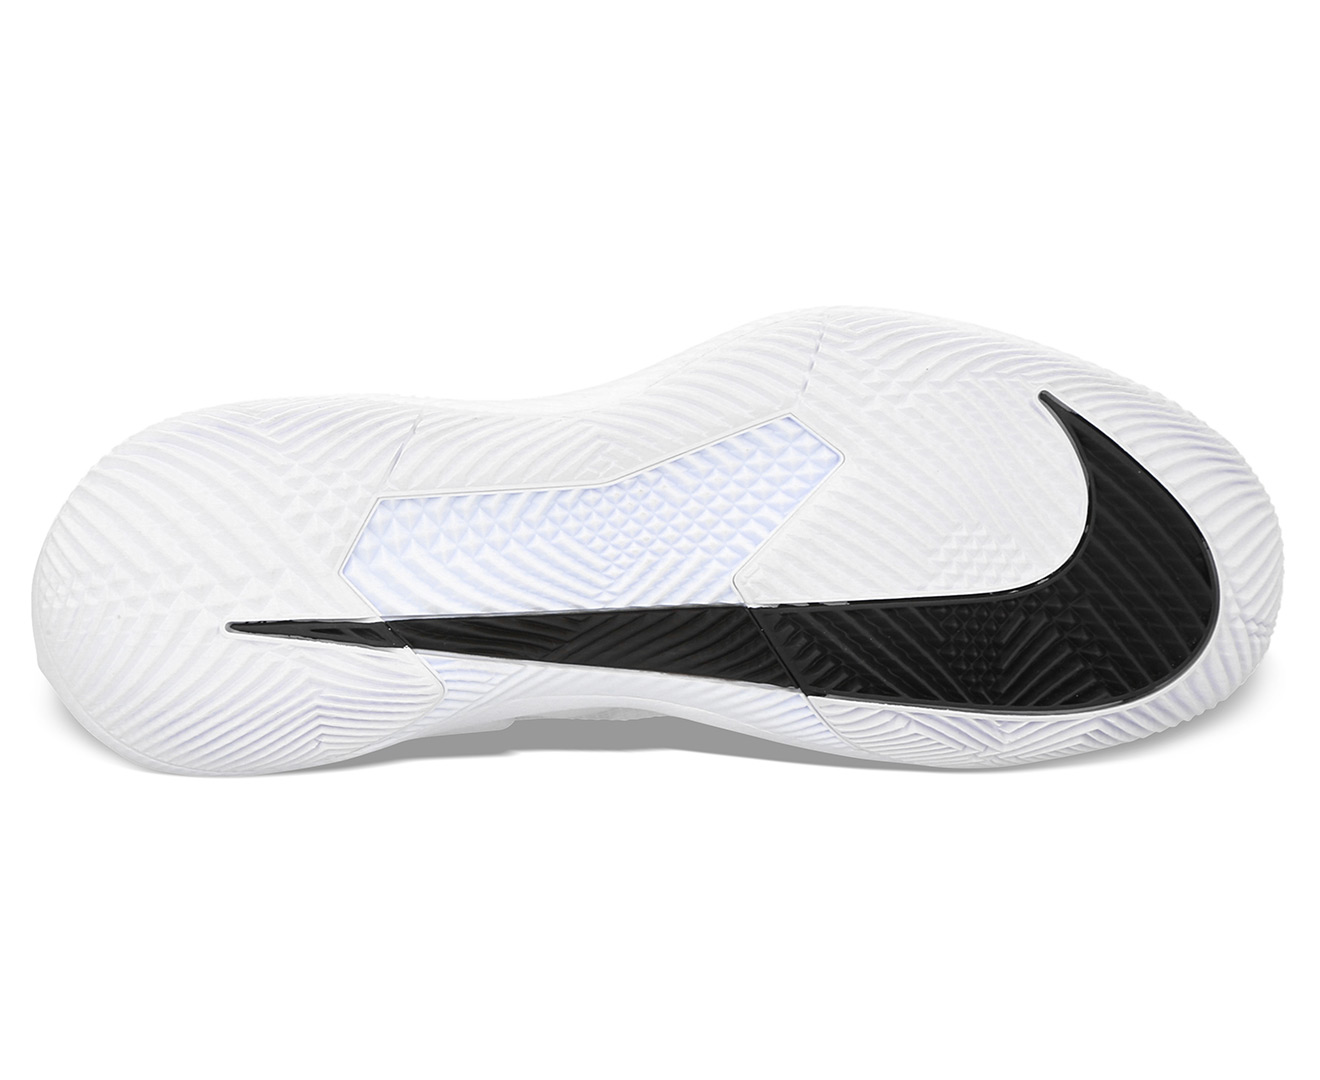 Nike Men's Air Zoom Vapor Pro Hardcourt Tennis Shoes - White/Black ...